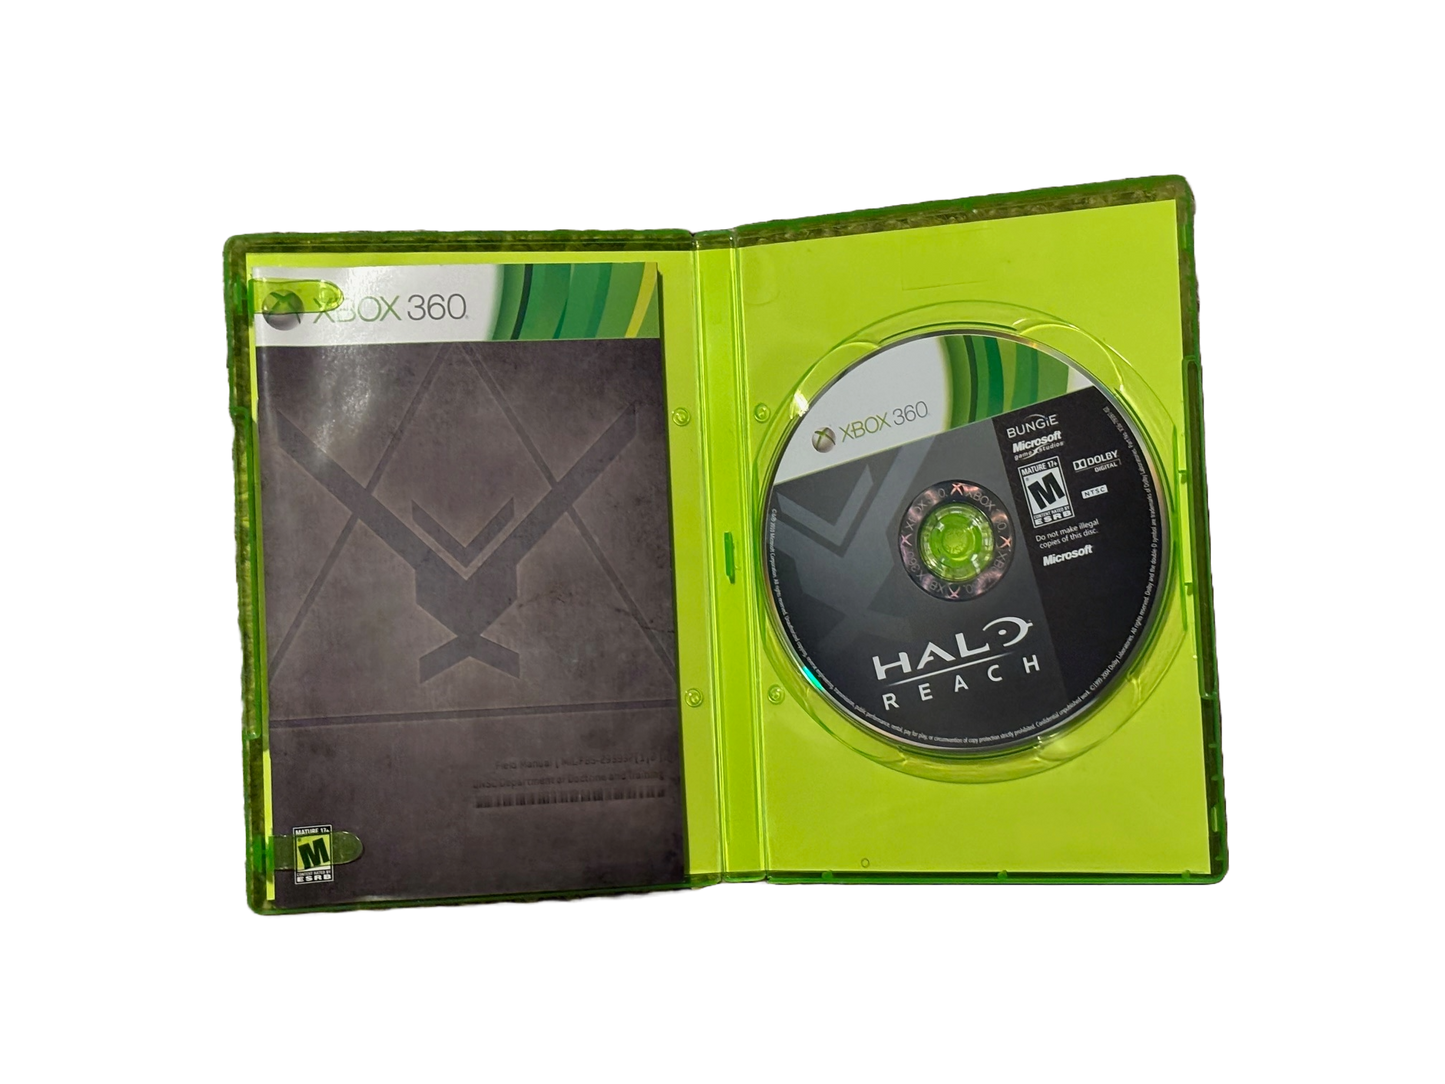 Halo Reach Microsoft Xbox 360 Video Game. Complete.